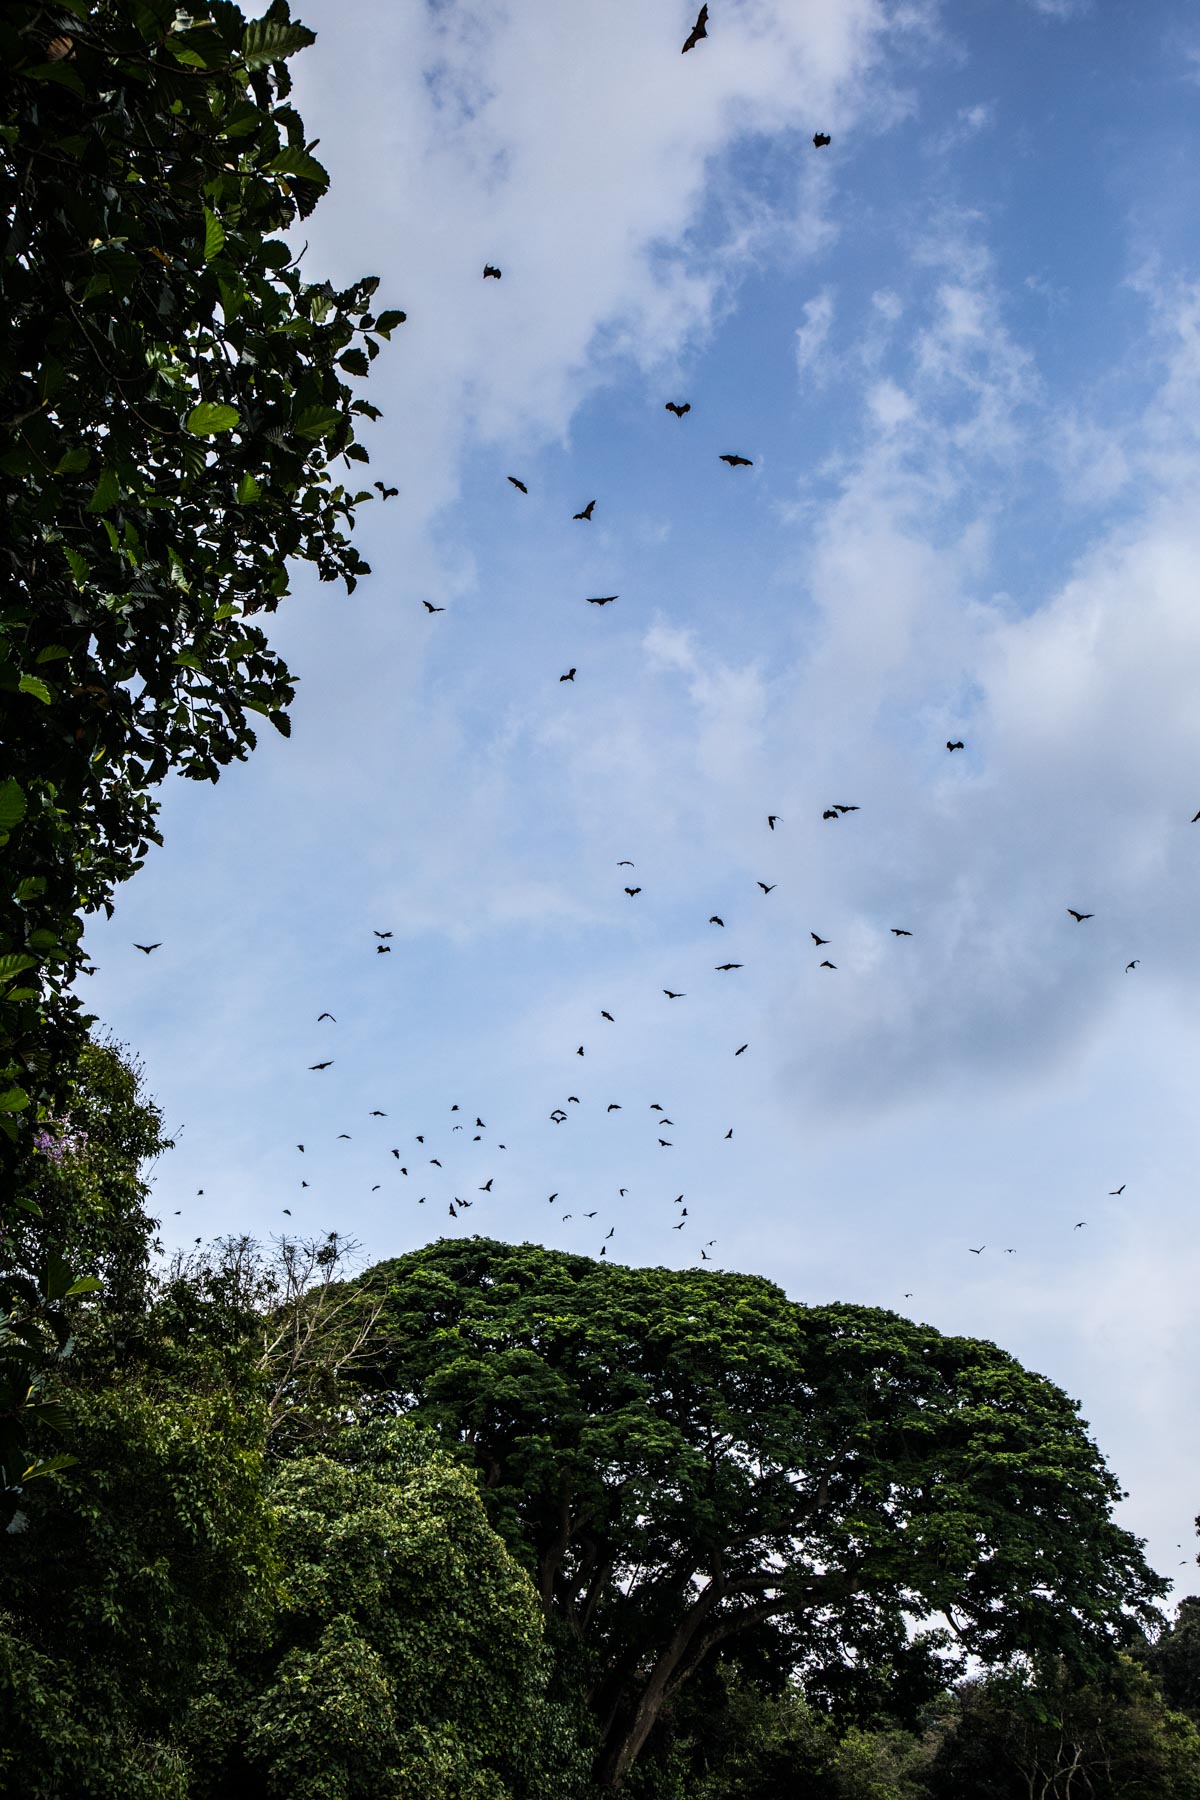 Bats Flying in the Royal Botanical Gardens (Peradeniya Park), Kandy, Sri Lanka. Photographed by Shika Finnemore - thebellephant.com